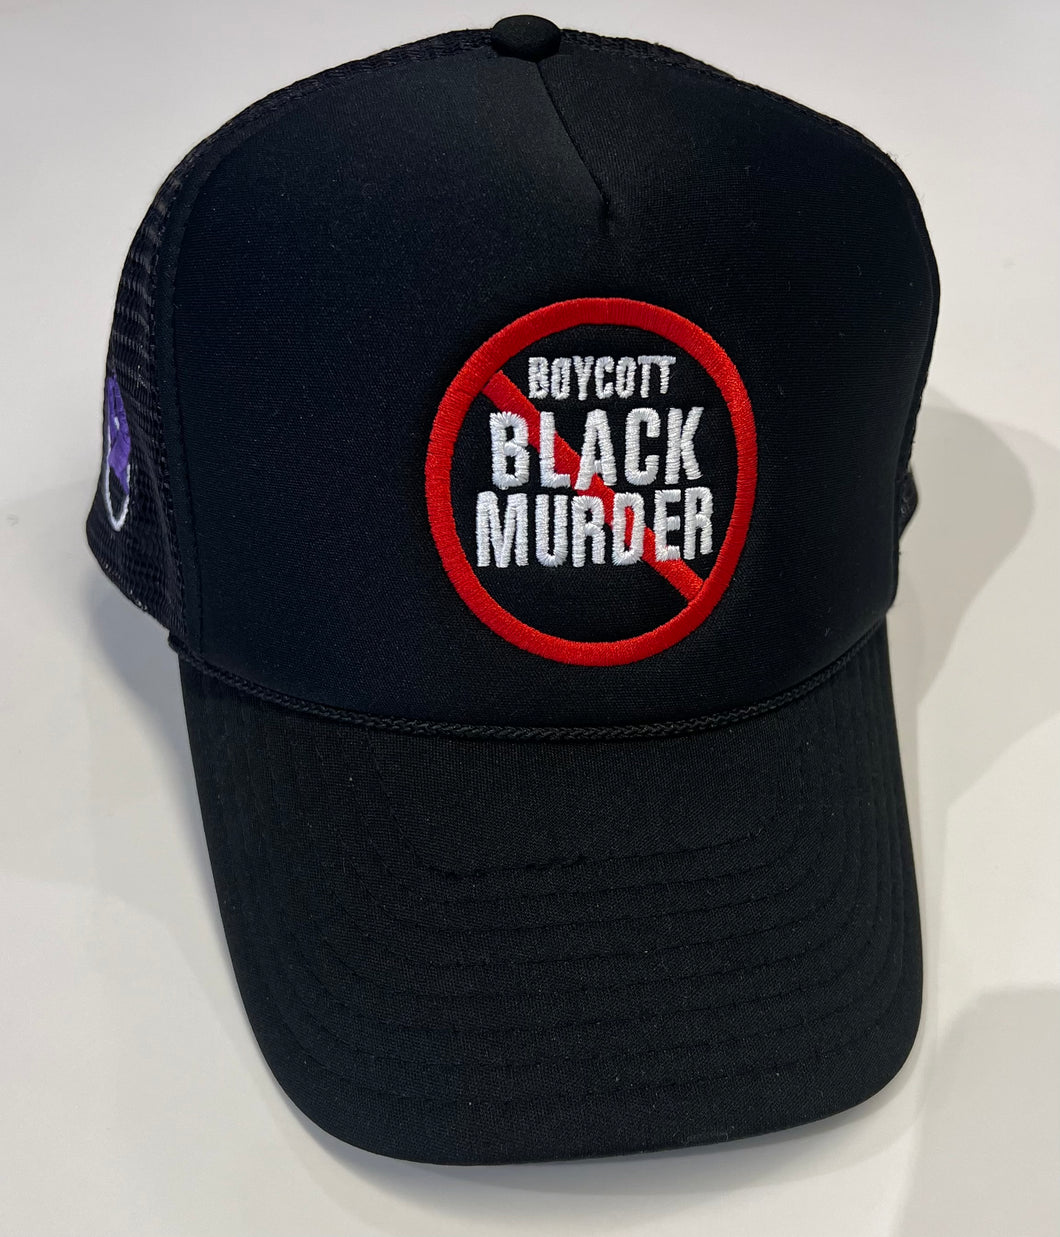 Boycott Black Murder Trucker Hat